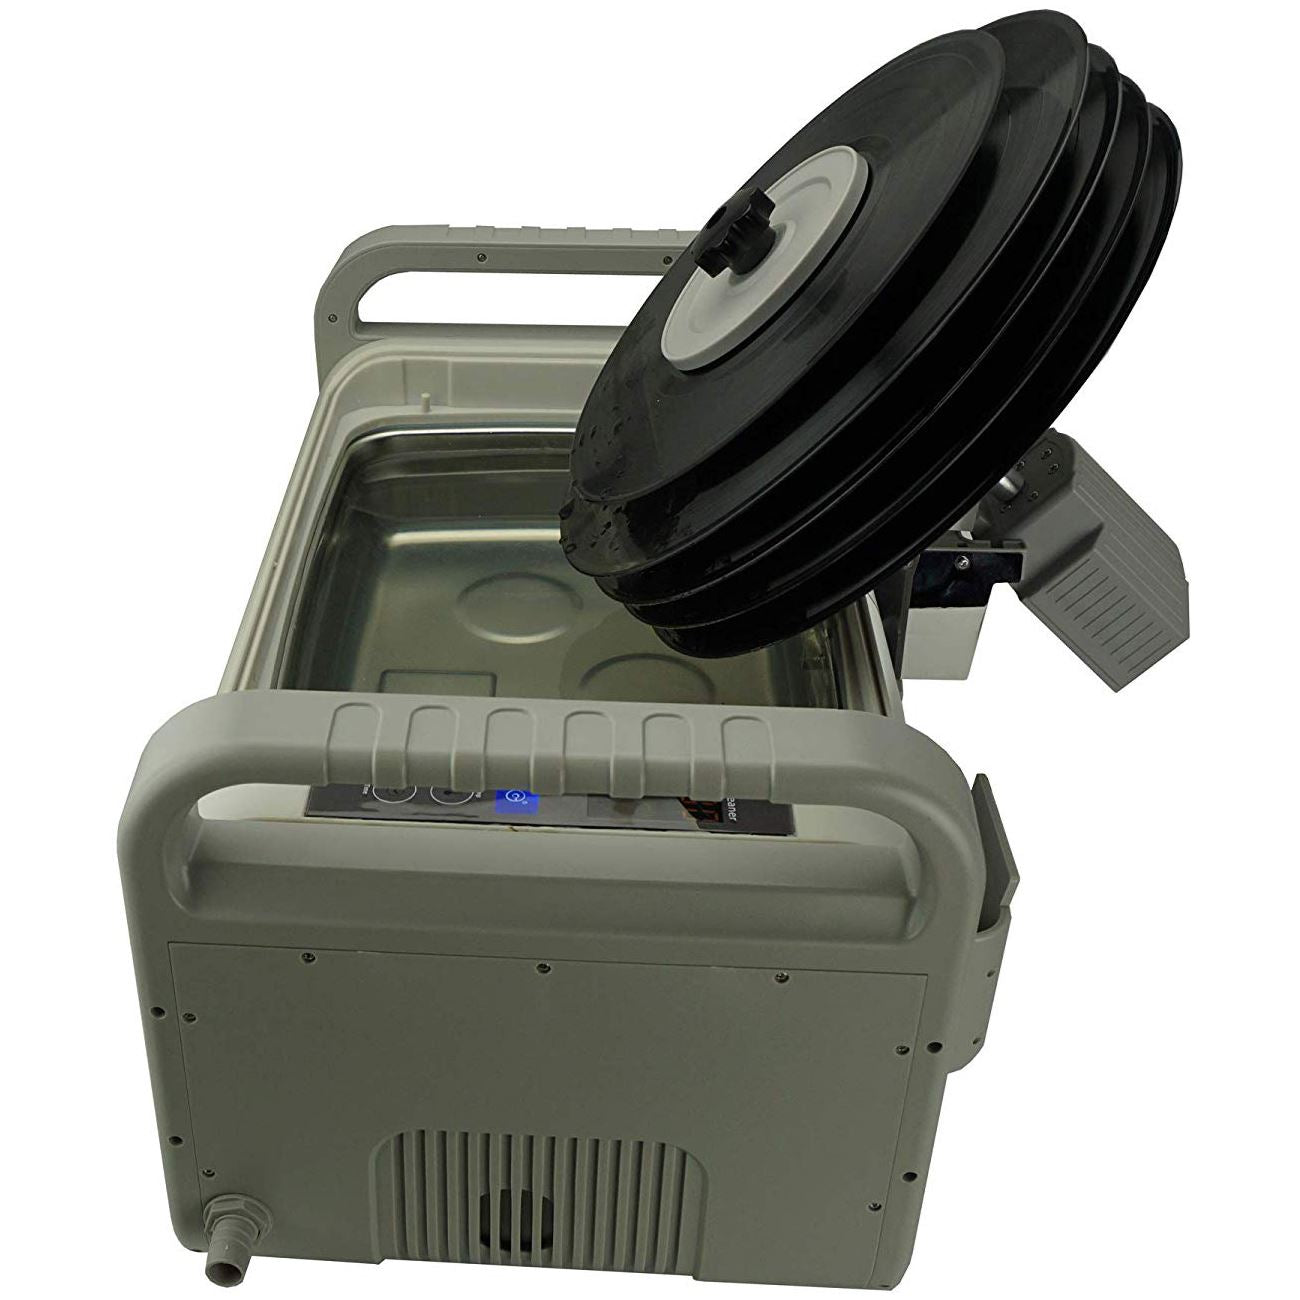 UltraSonic Record Cleaner - iSonic P4875II+MVR5